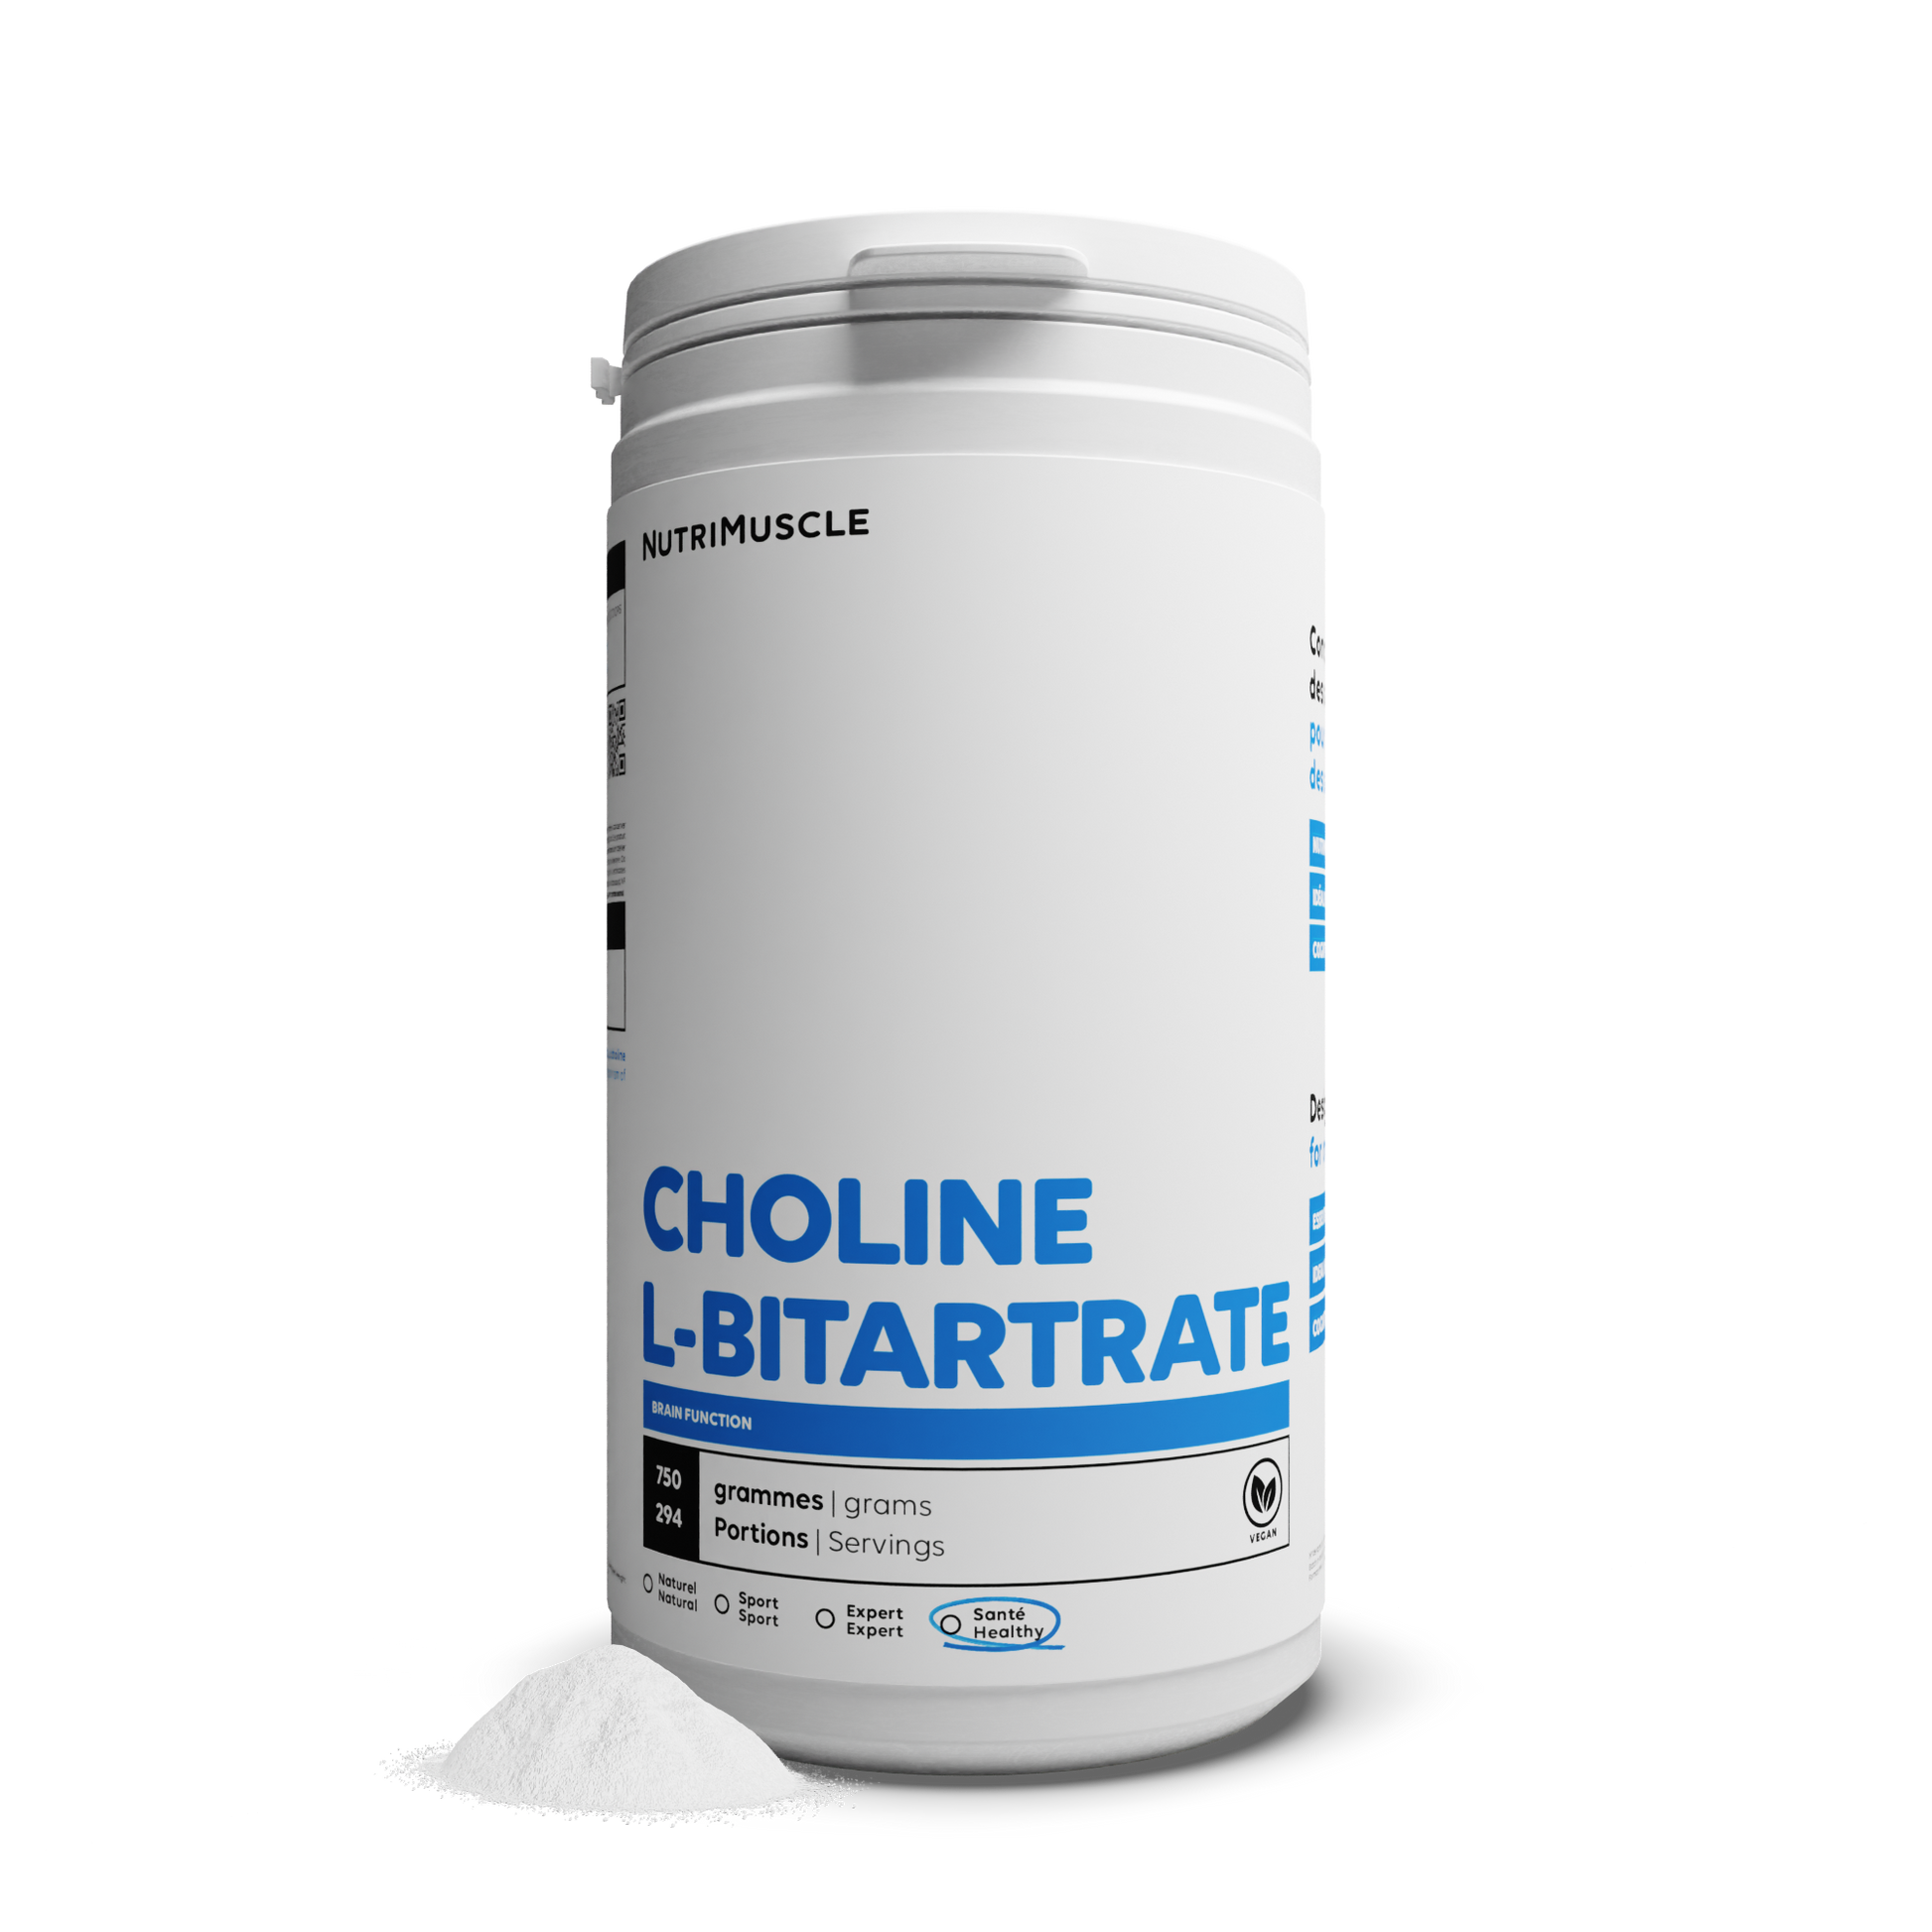 Choline l-bitatrate powder